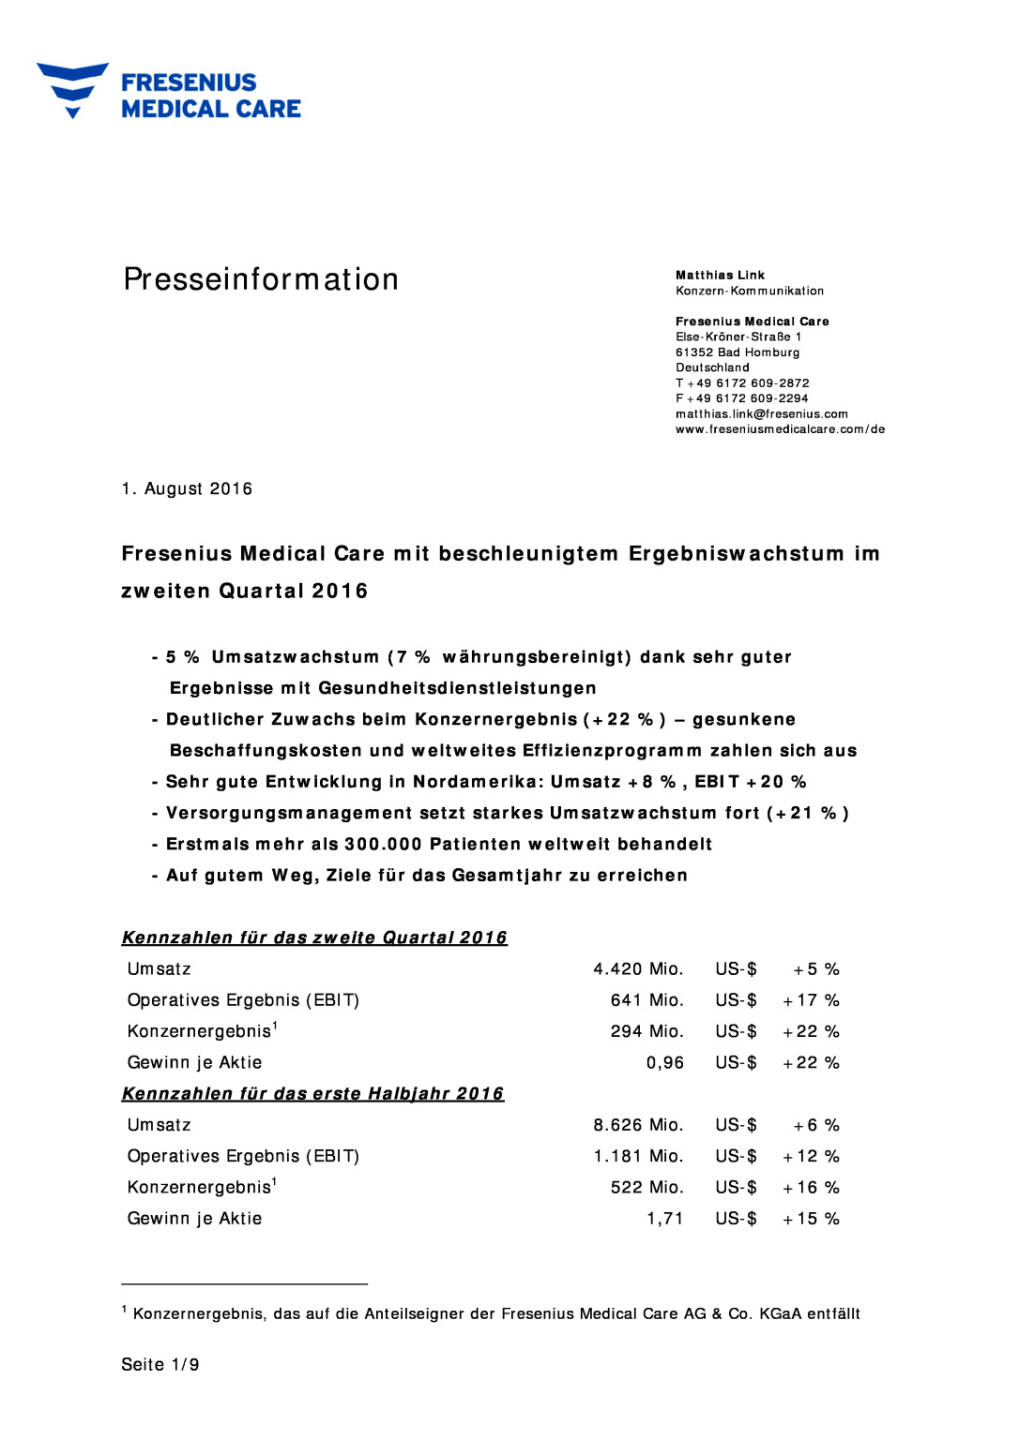 Fresenius Medical Care: Ergebniswachstum im zweiten Quartal 2016, Seite 1/9, komplettes Dokument unter http://boerse-social.com/static/uploads/file_1540_fresenius_medical_care_ergebniswachstum_im_zweiten_quartal_2016.pdf